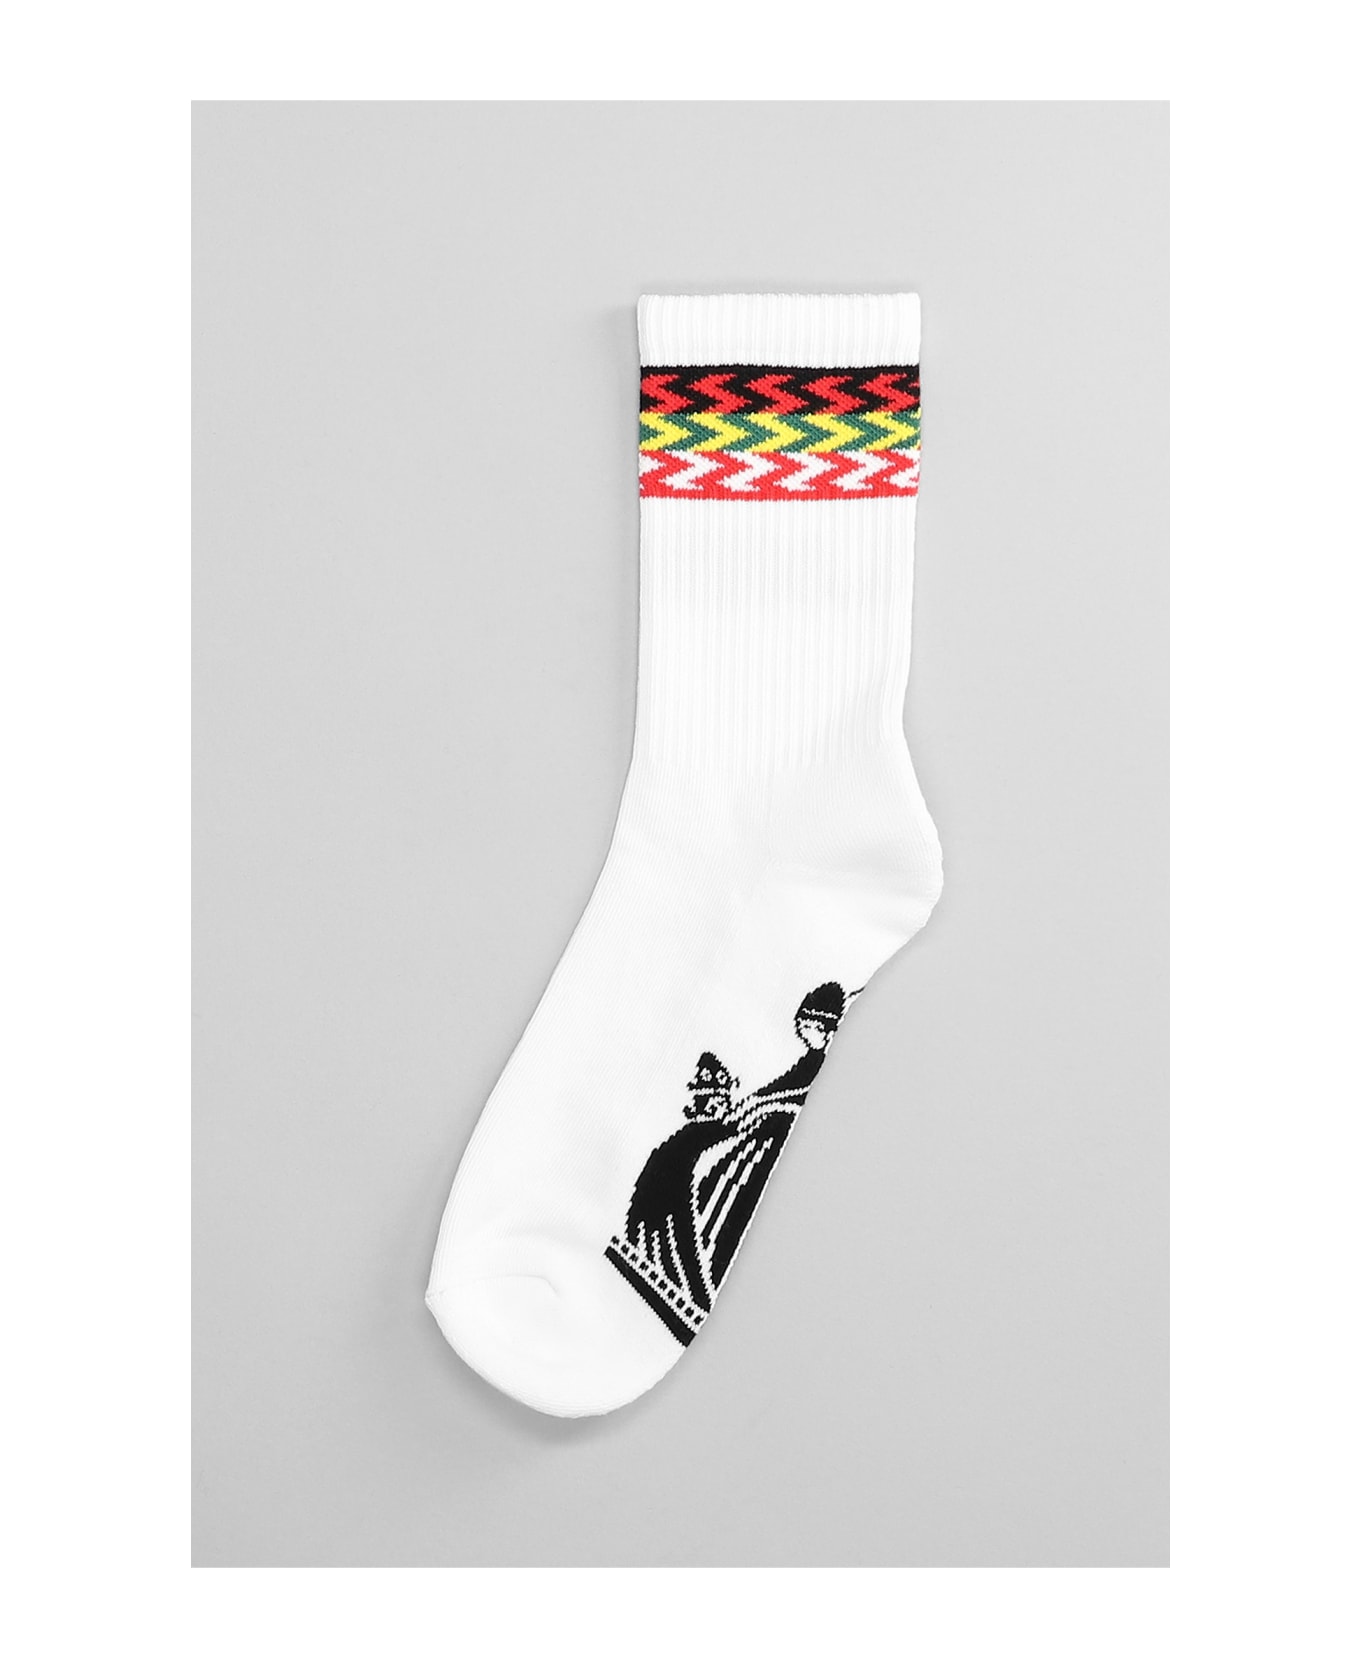 Lanvin Socks In Black And White Cotton - black and white